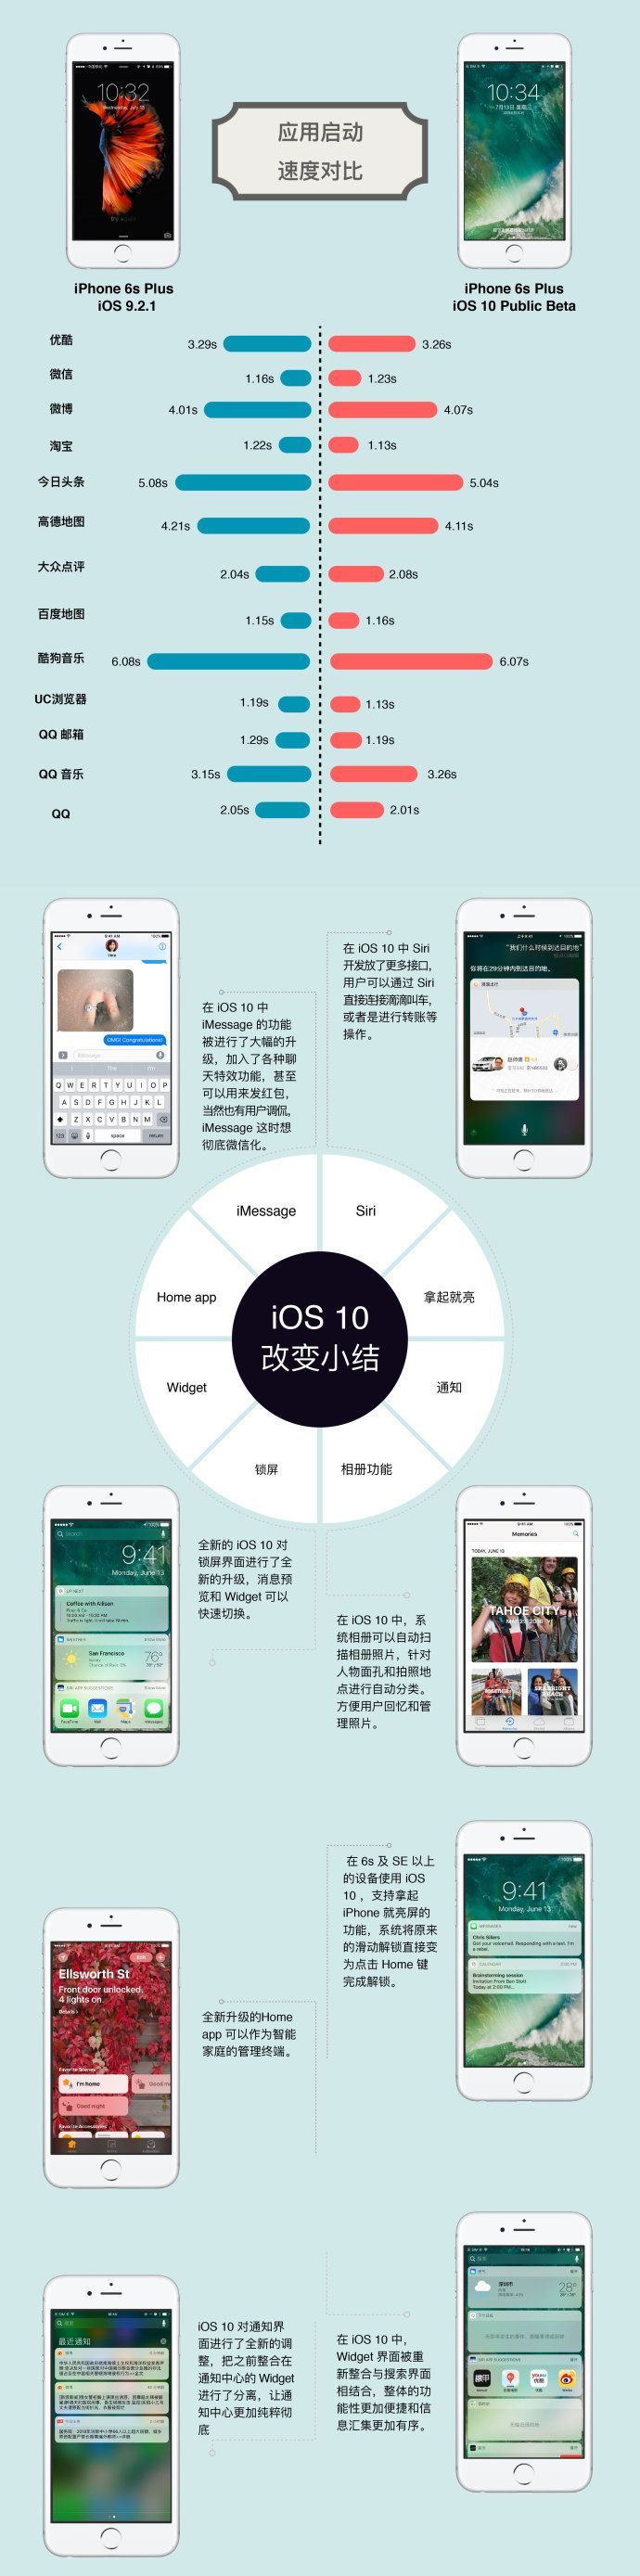 iOS10和iOS9有哪些變化 arpun.com